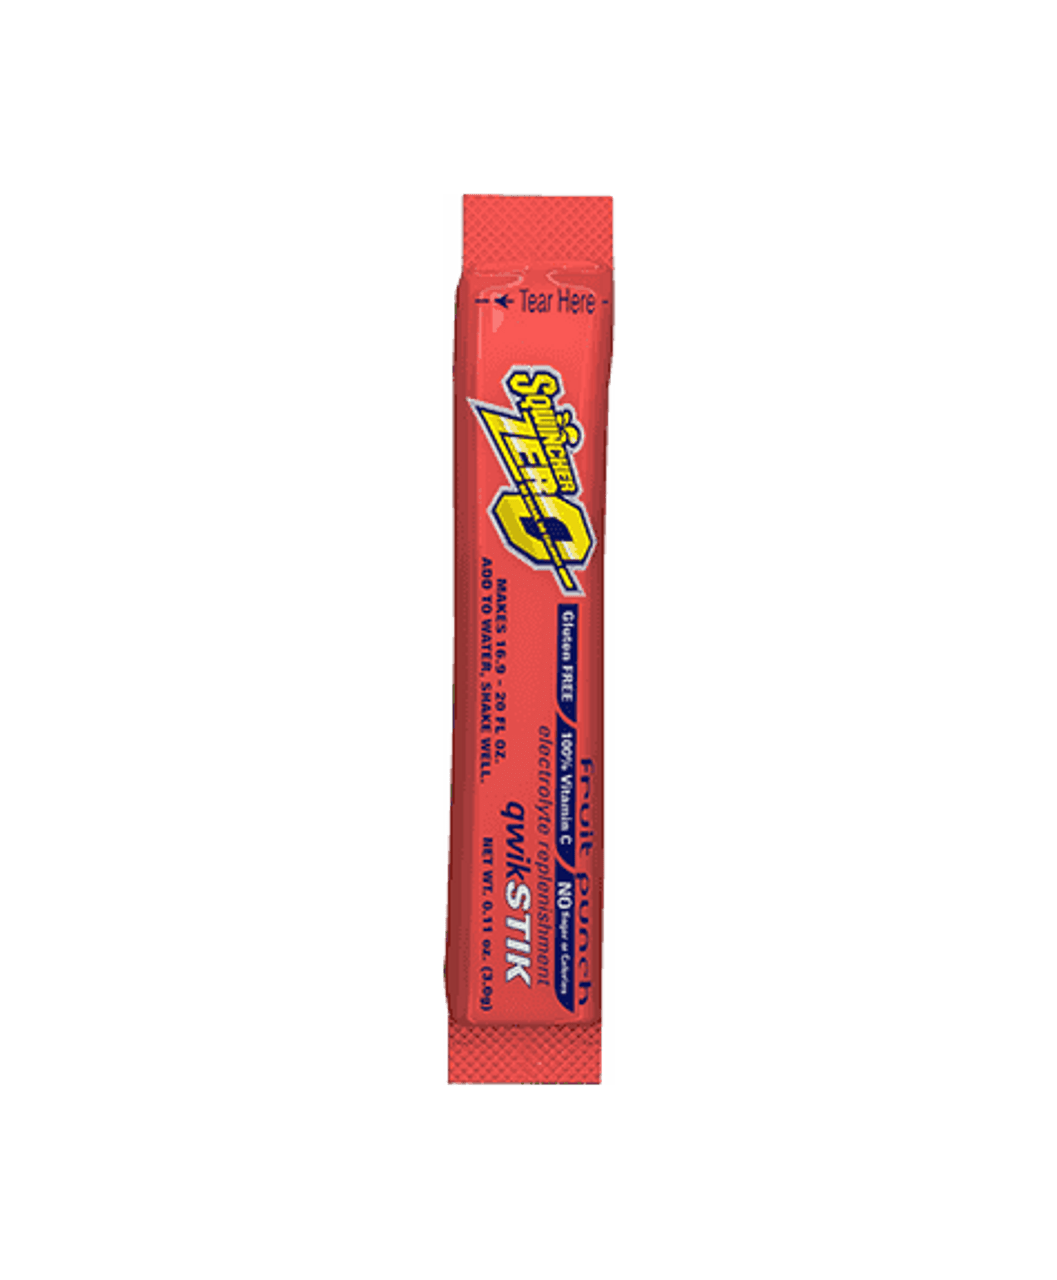 Sqwincher Stik Qwik Beverage 20Oz Yield Quik Stick Zero -1 Pack of 50